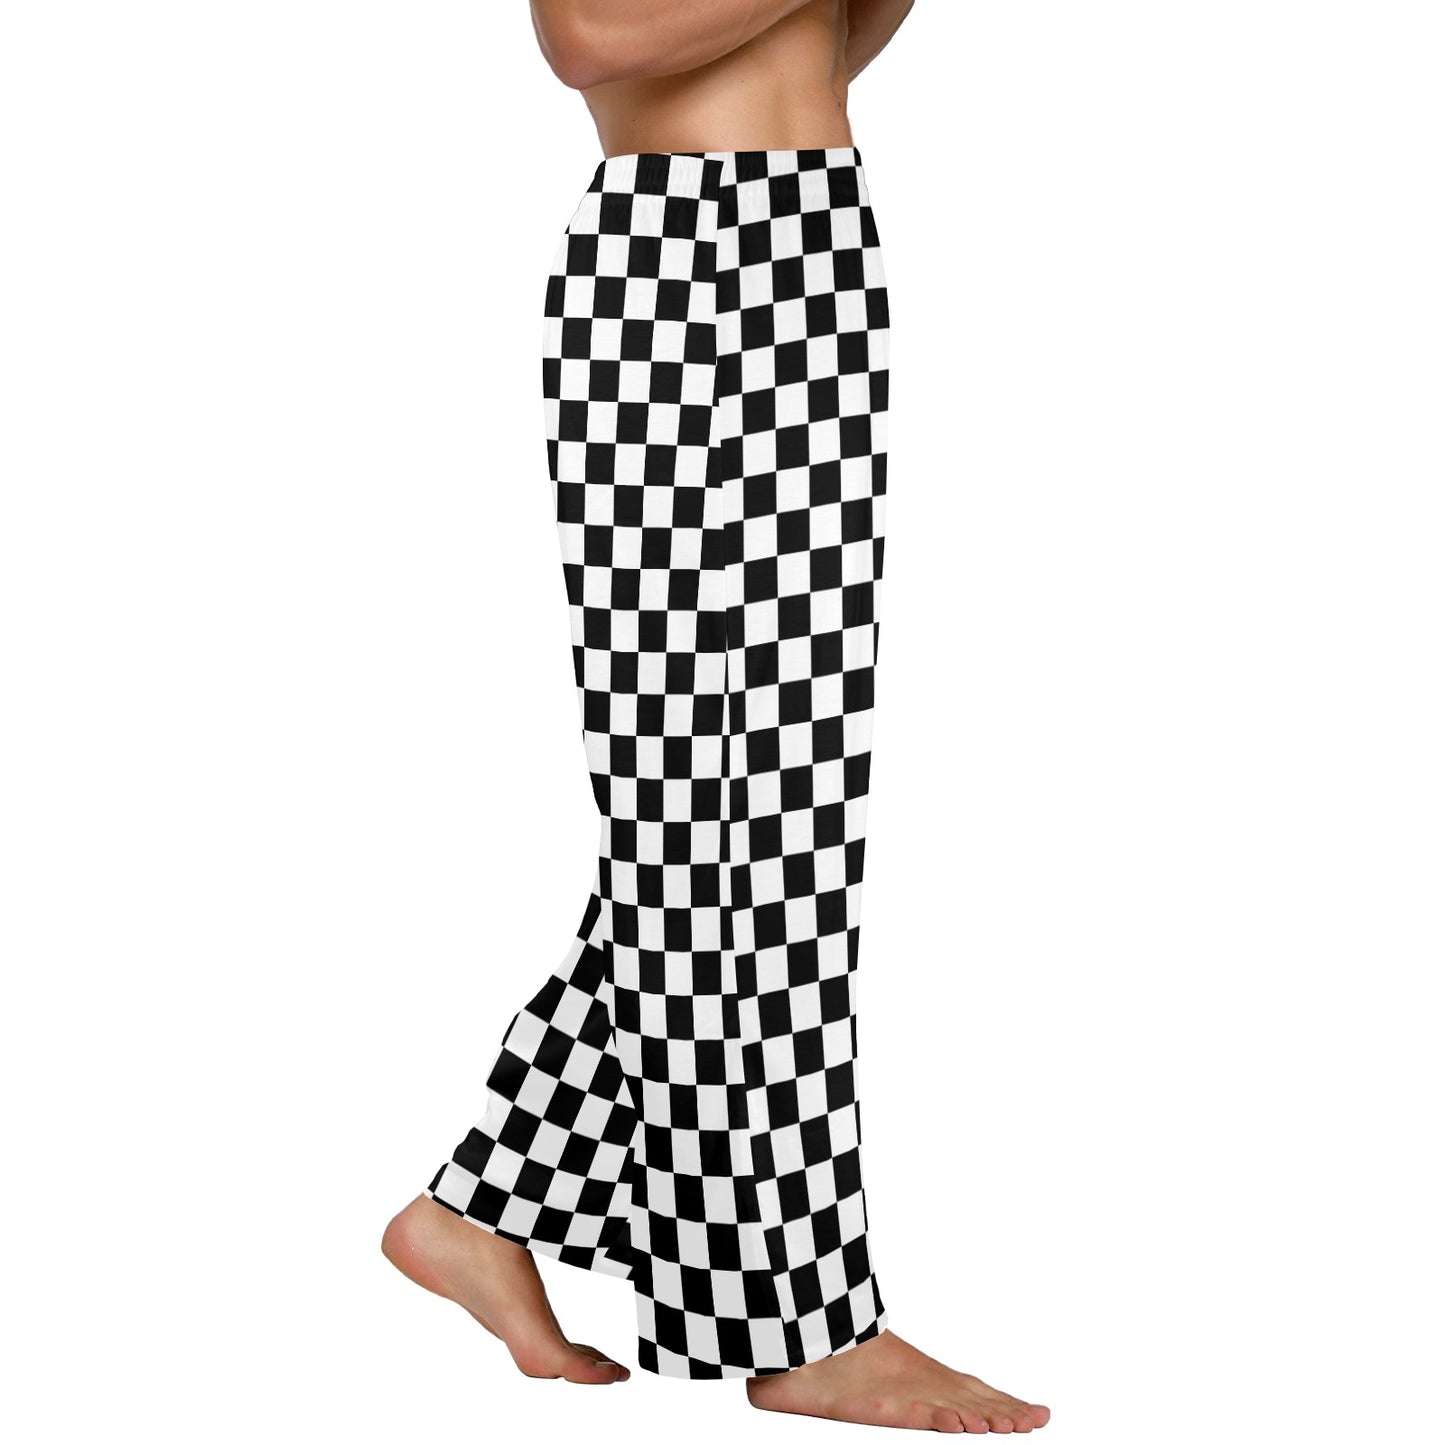 Checkered Men Pajamas Pants, Black White Check Checkerboard Satin PJ Sleep Trousers Couples Matching Trousers Bottoms